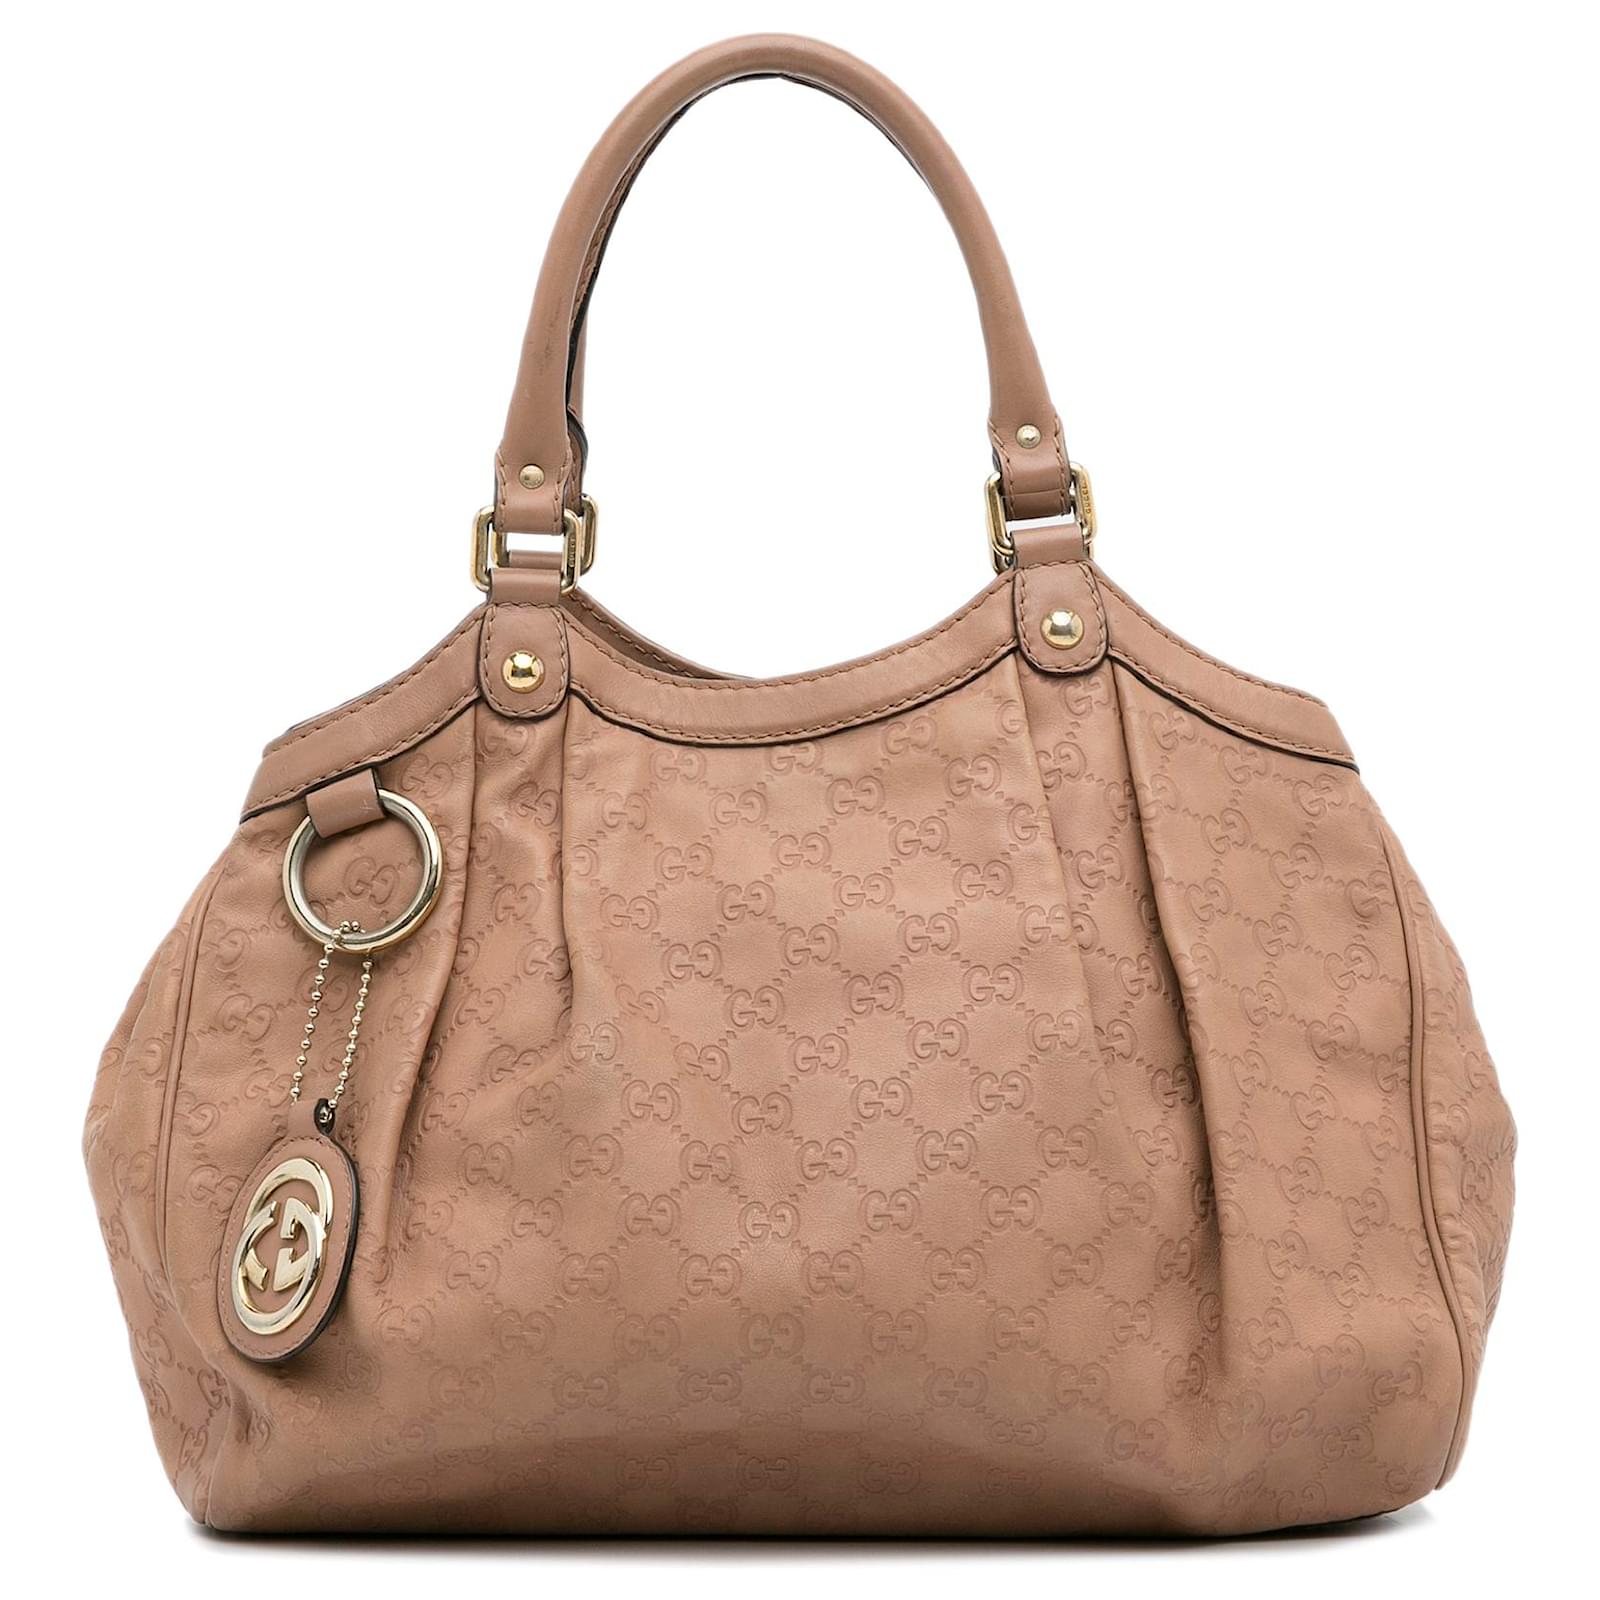 Gucci Sukey Tote Bag Medium